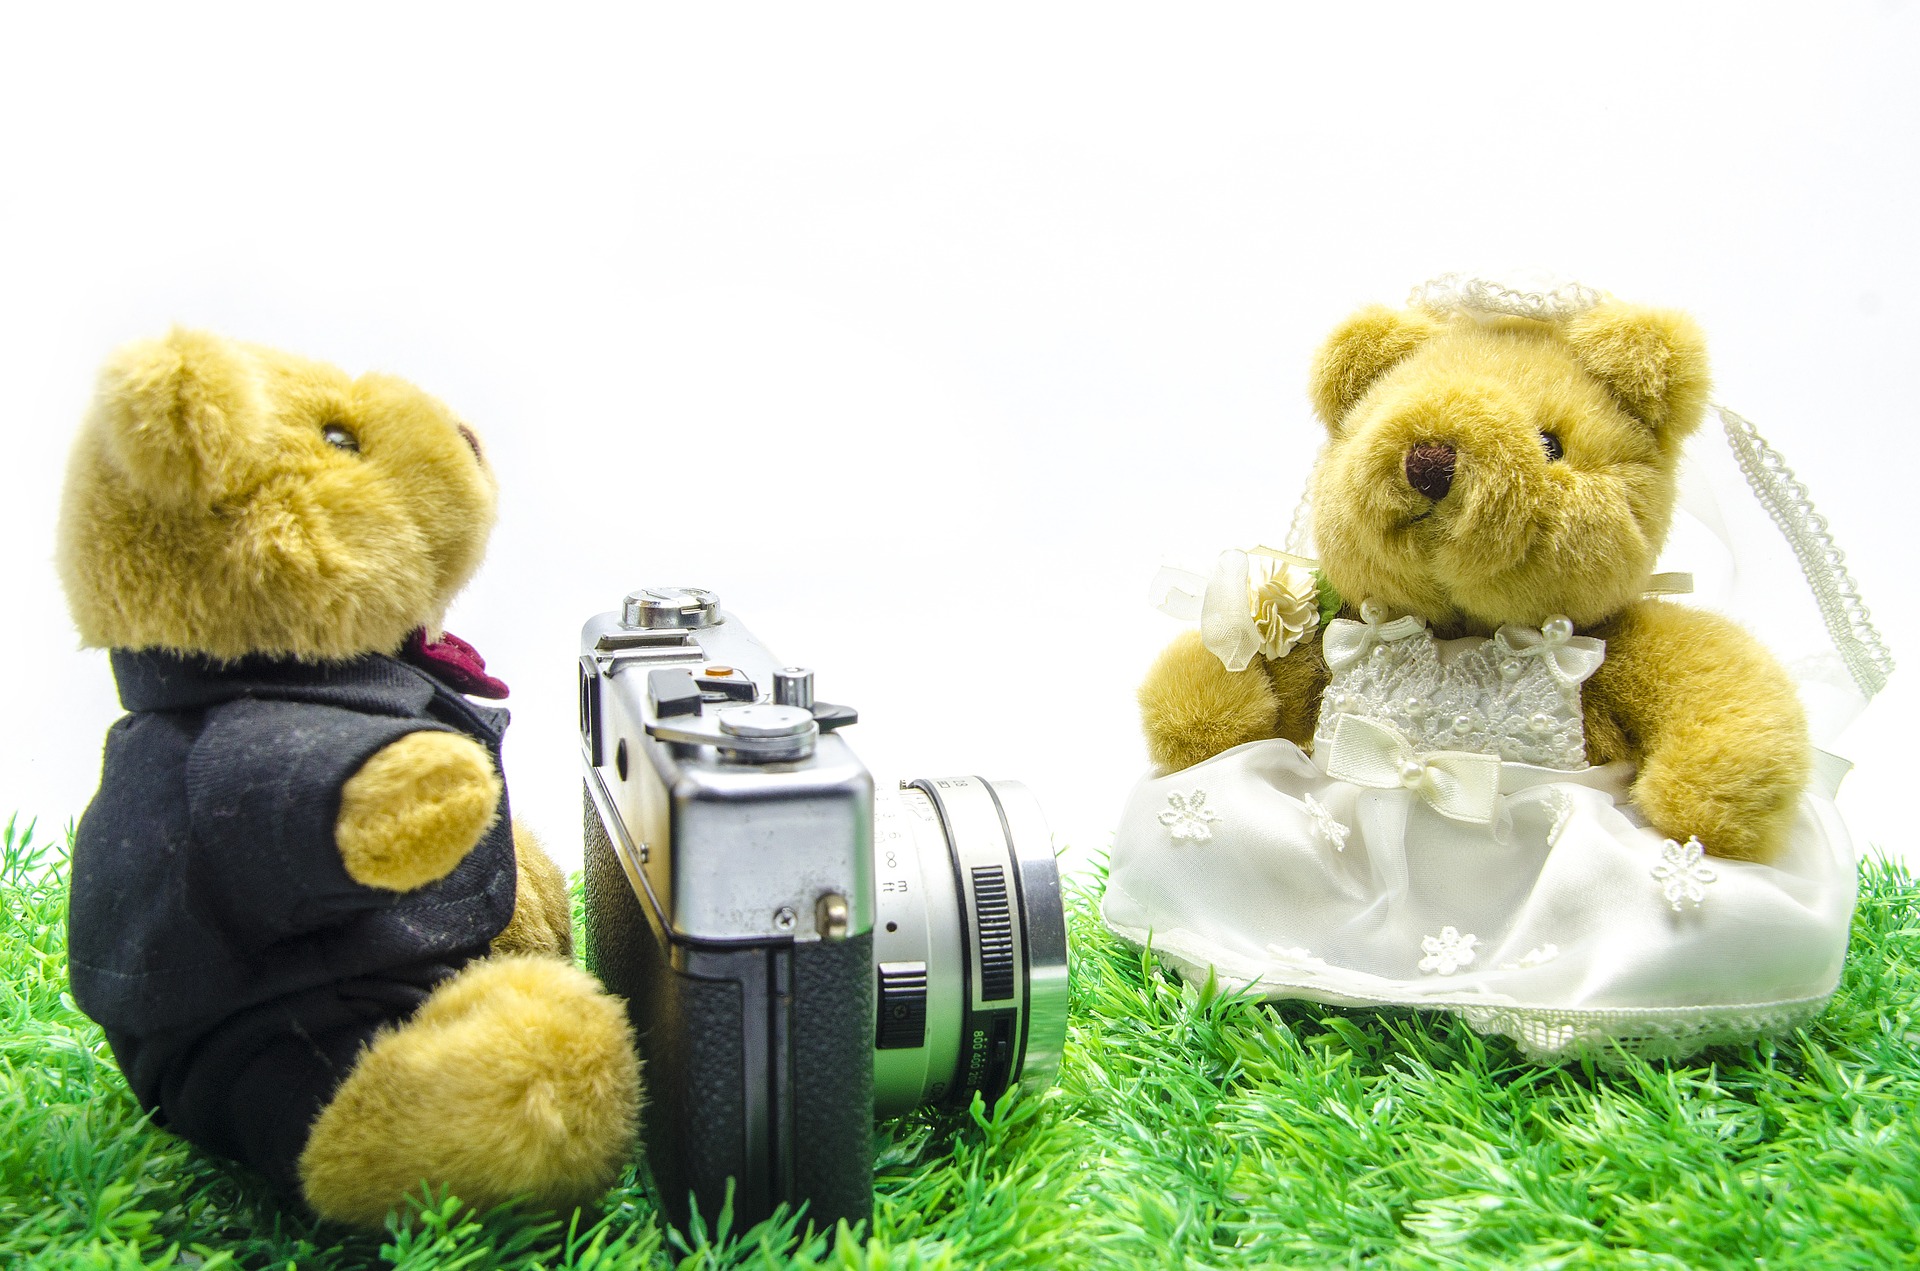 svatba medvědů